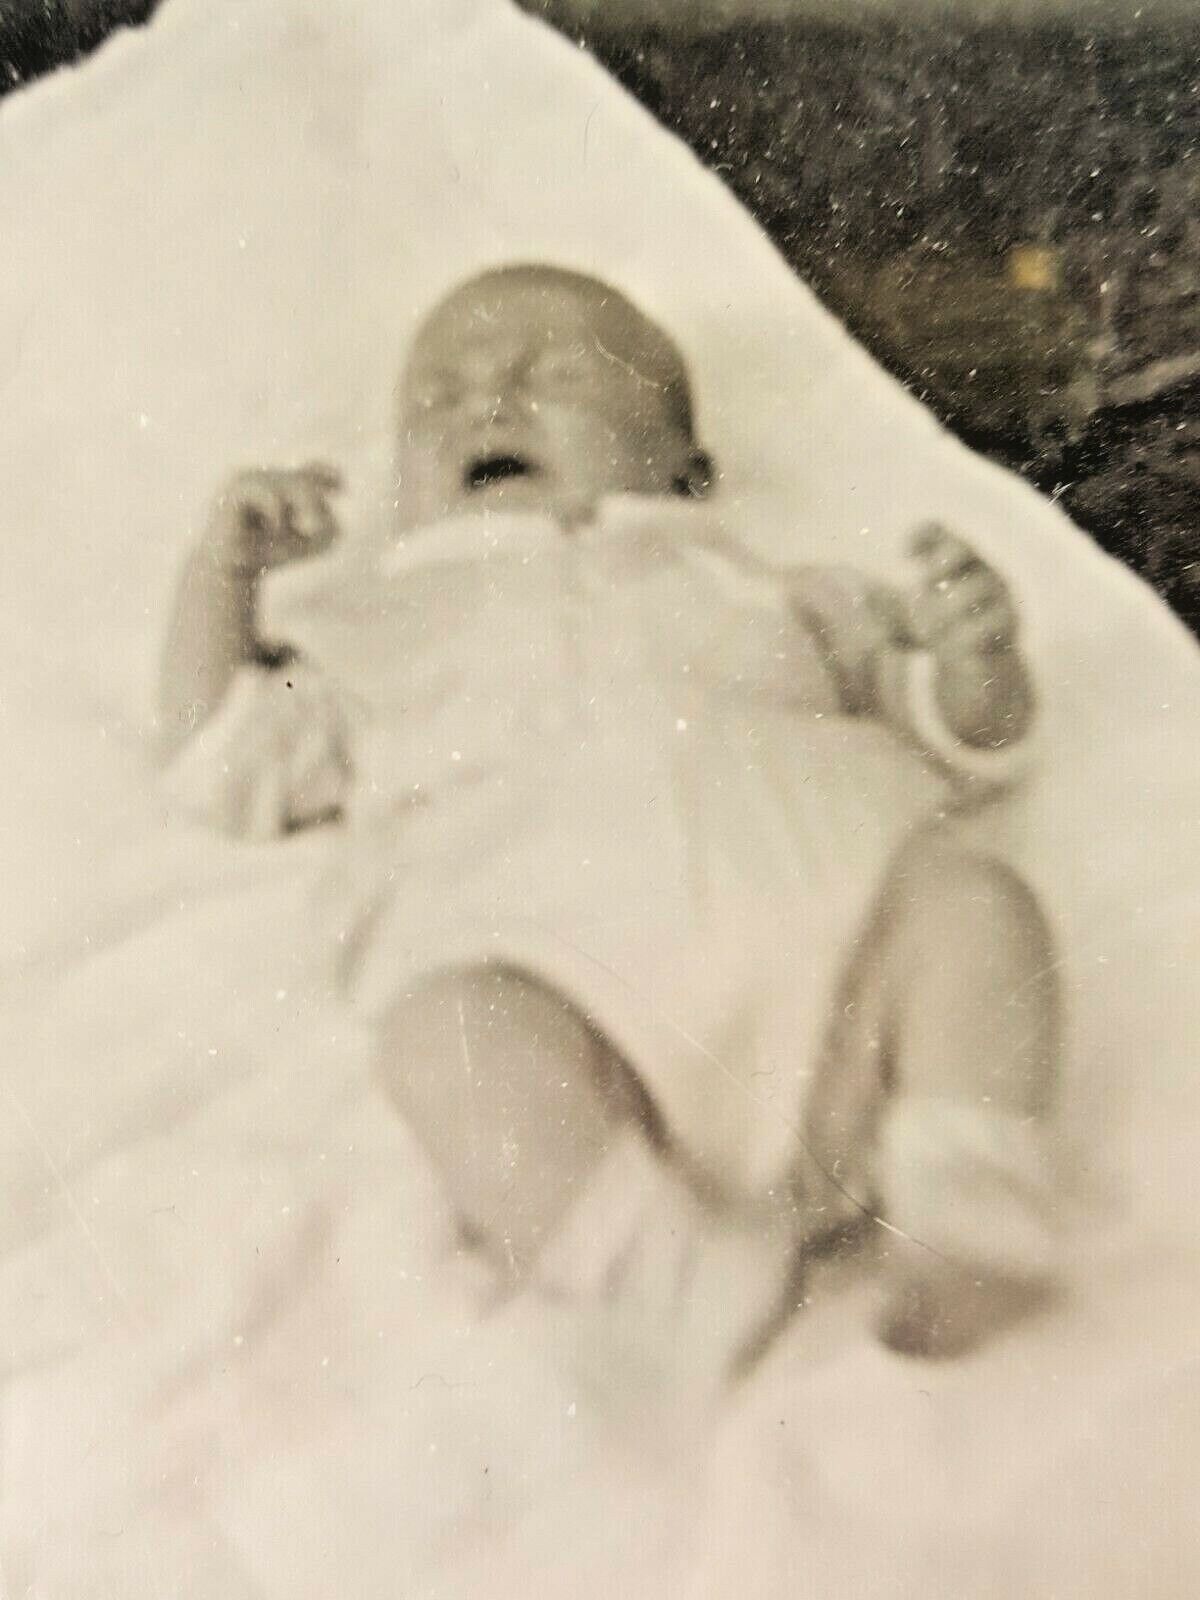 Vintage 1940s B&W Philadelphia Photo Infant Baby Crying on Blanket Outside 